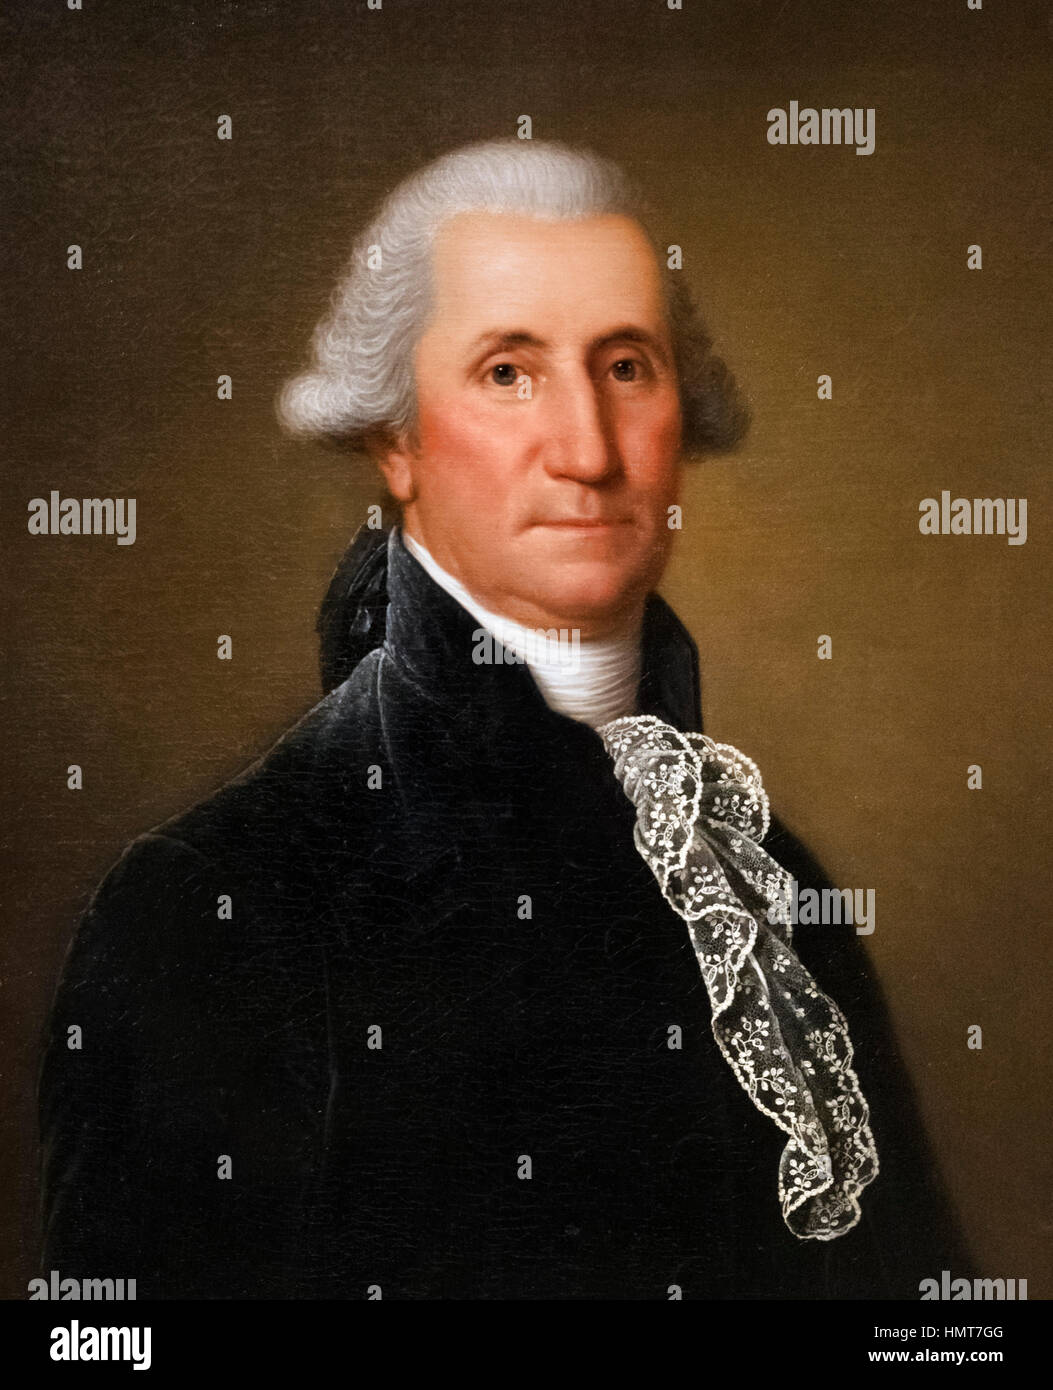 George Washington by Adolf Ulrik Wertmüller, oil on canvas, c.1794. Stock Photo